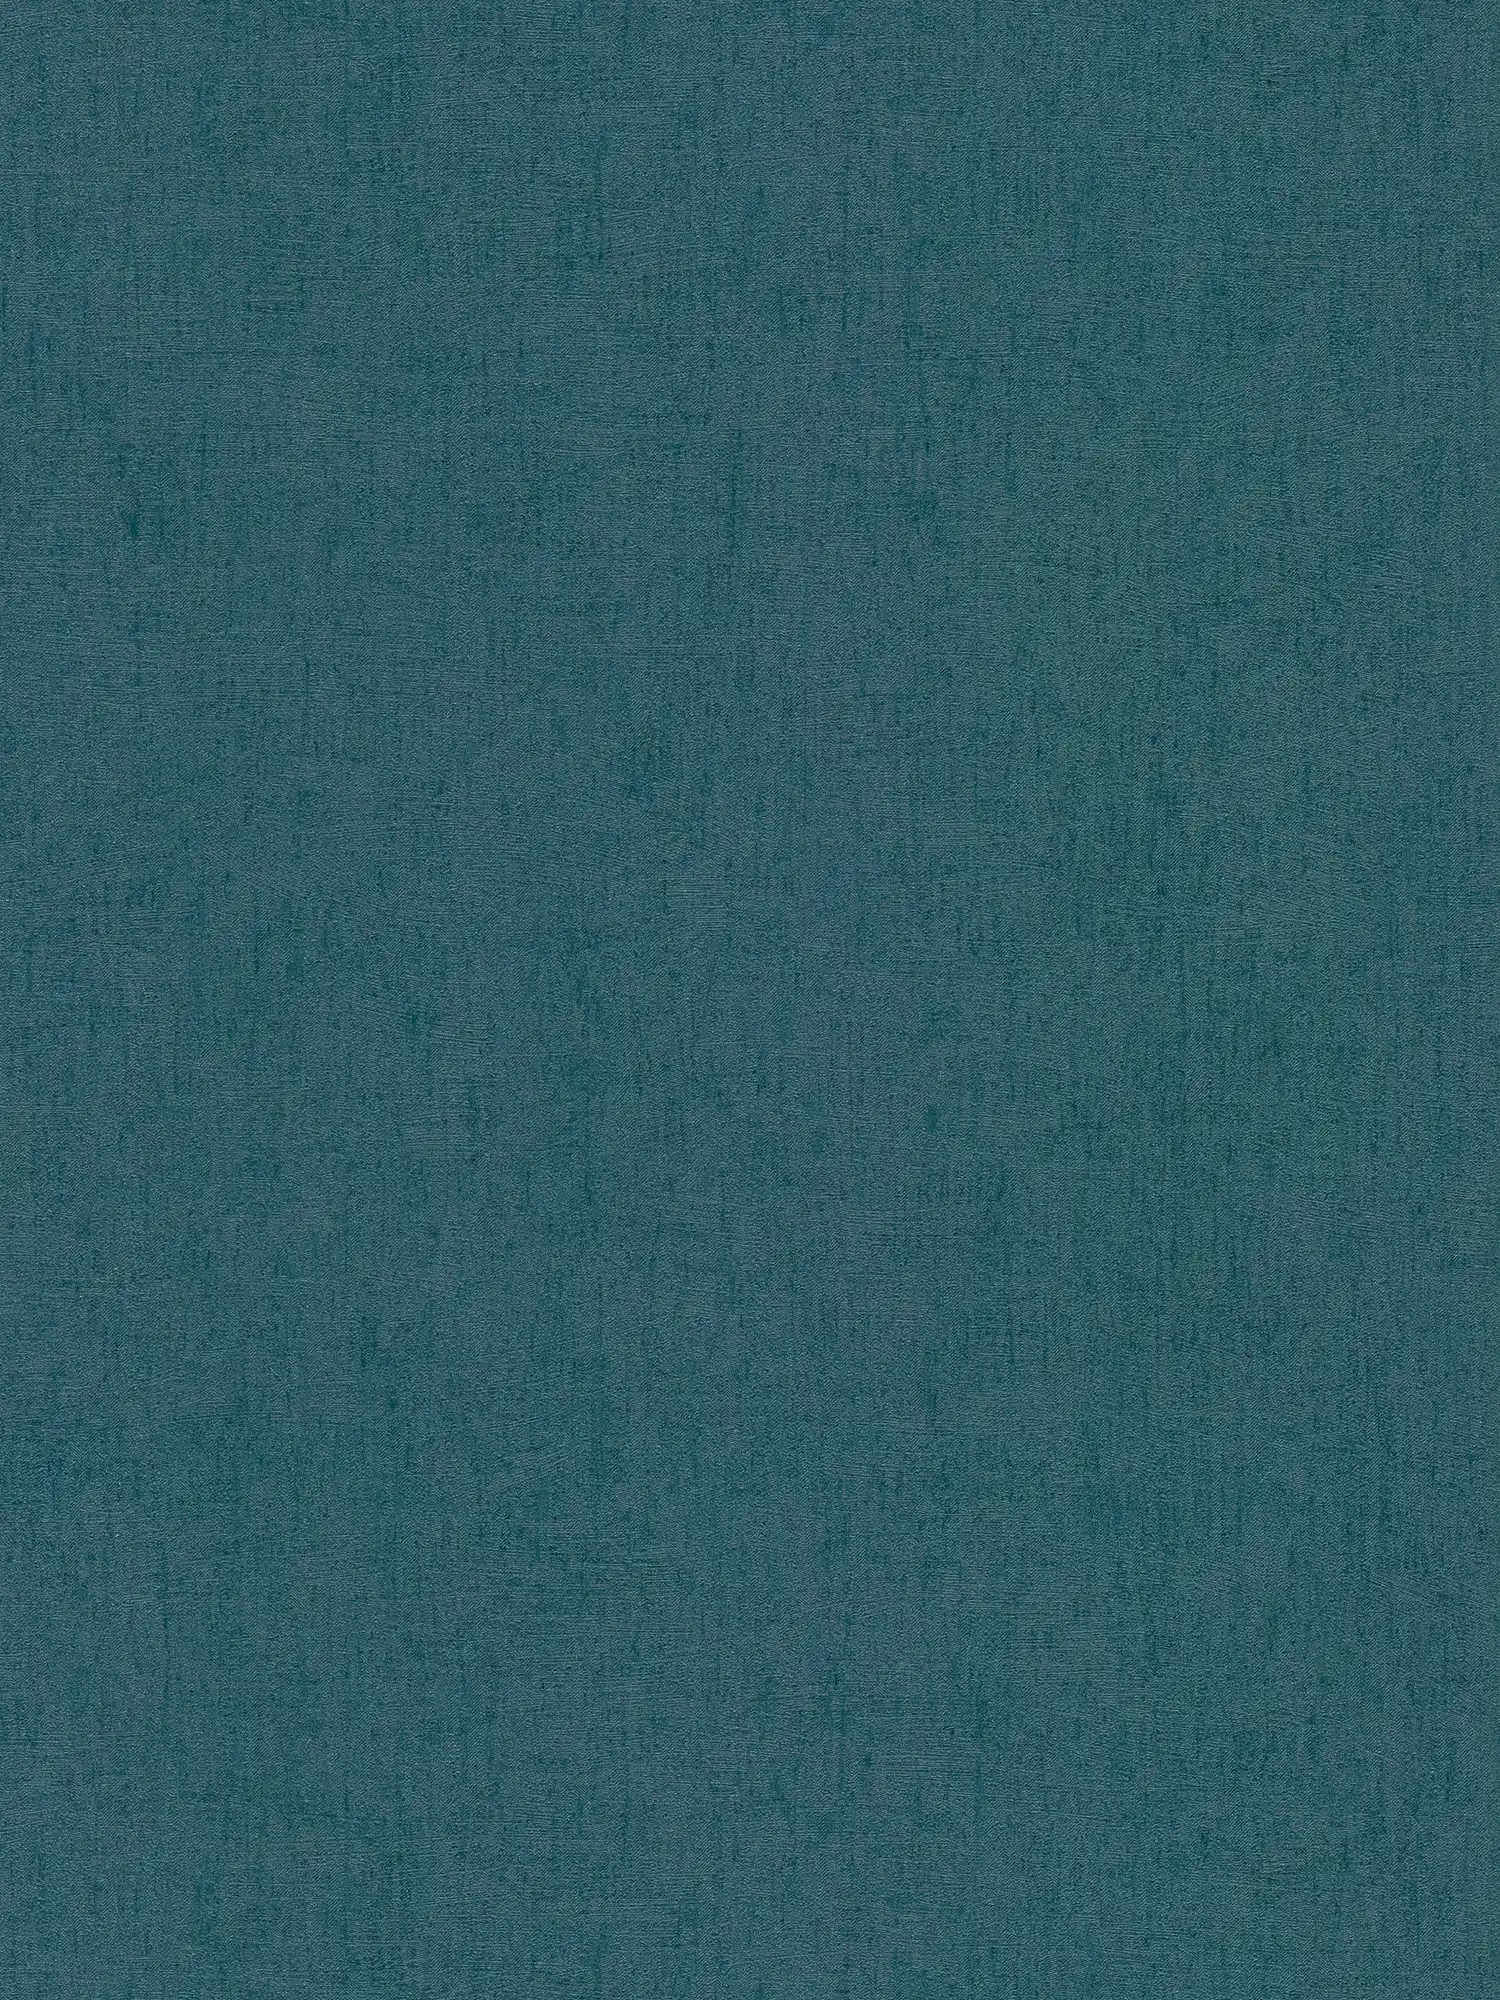 papel pintado texturizado gasolina con efecto brillo - azul, verde, metálico
